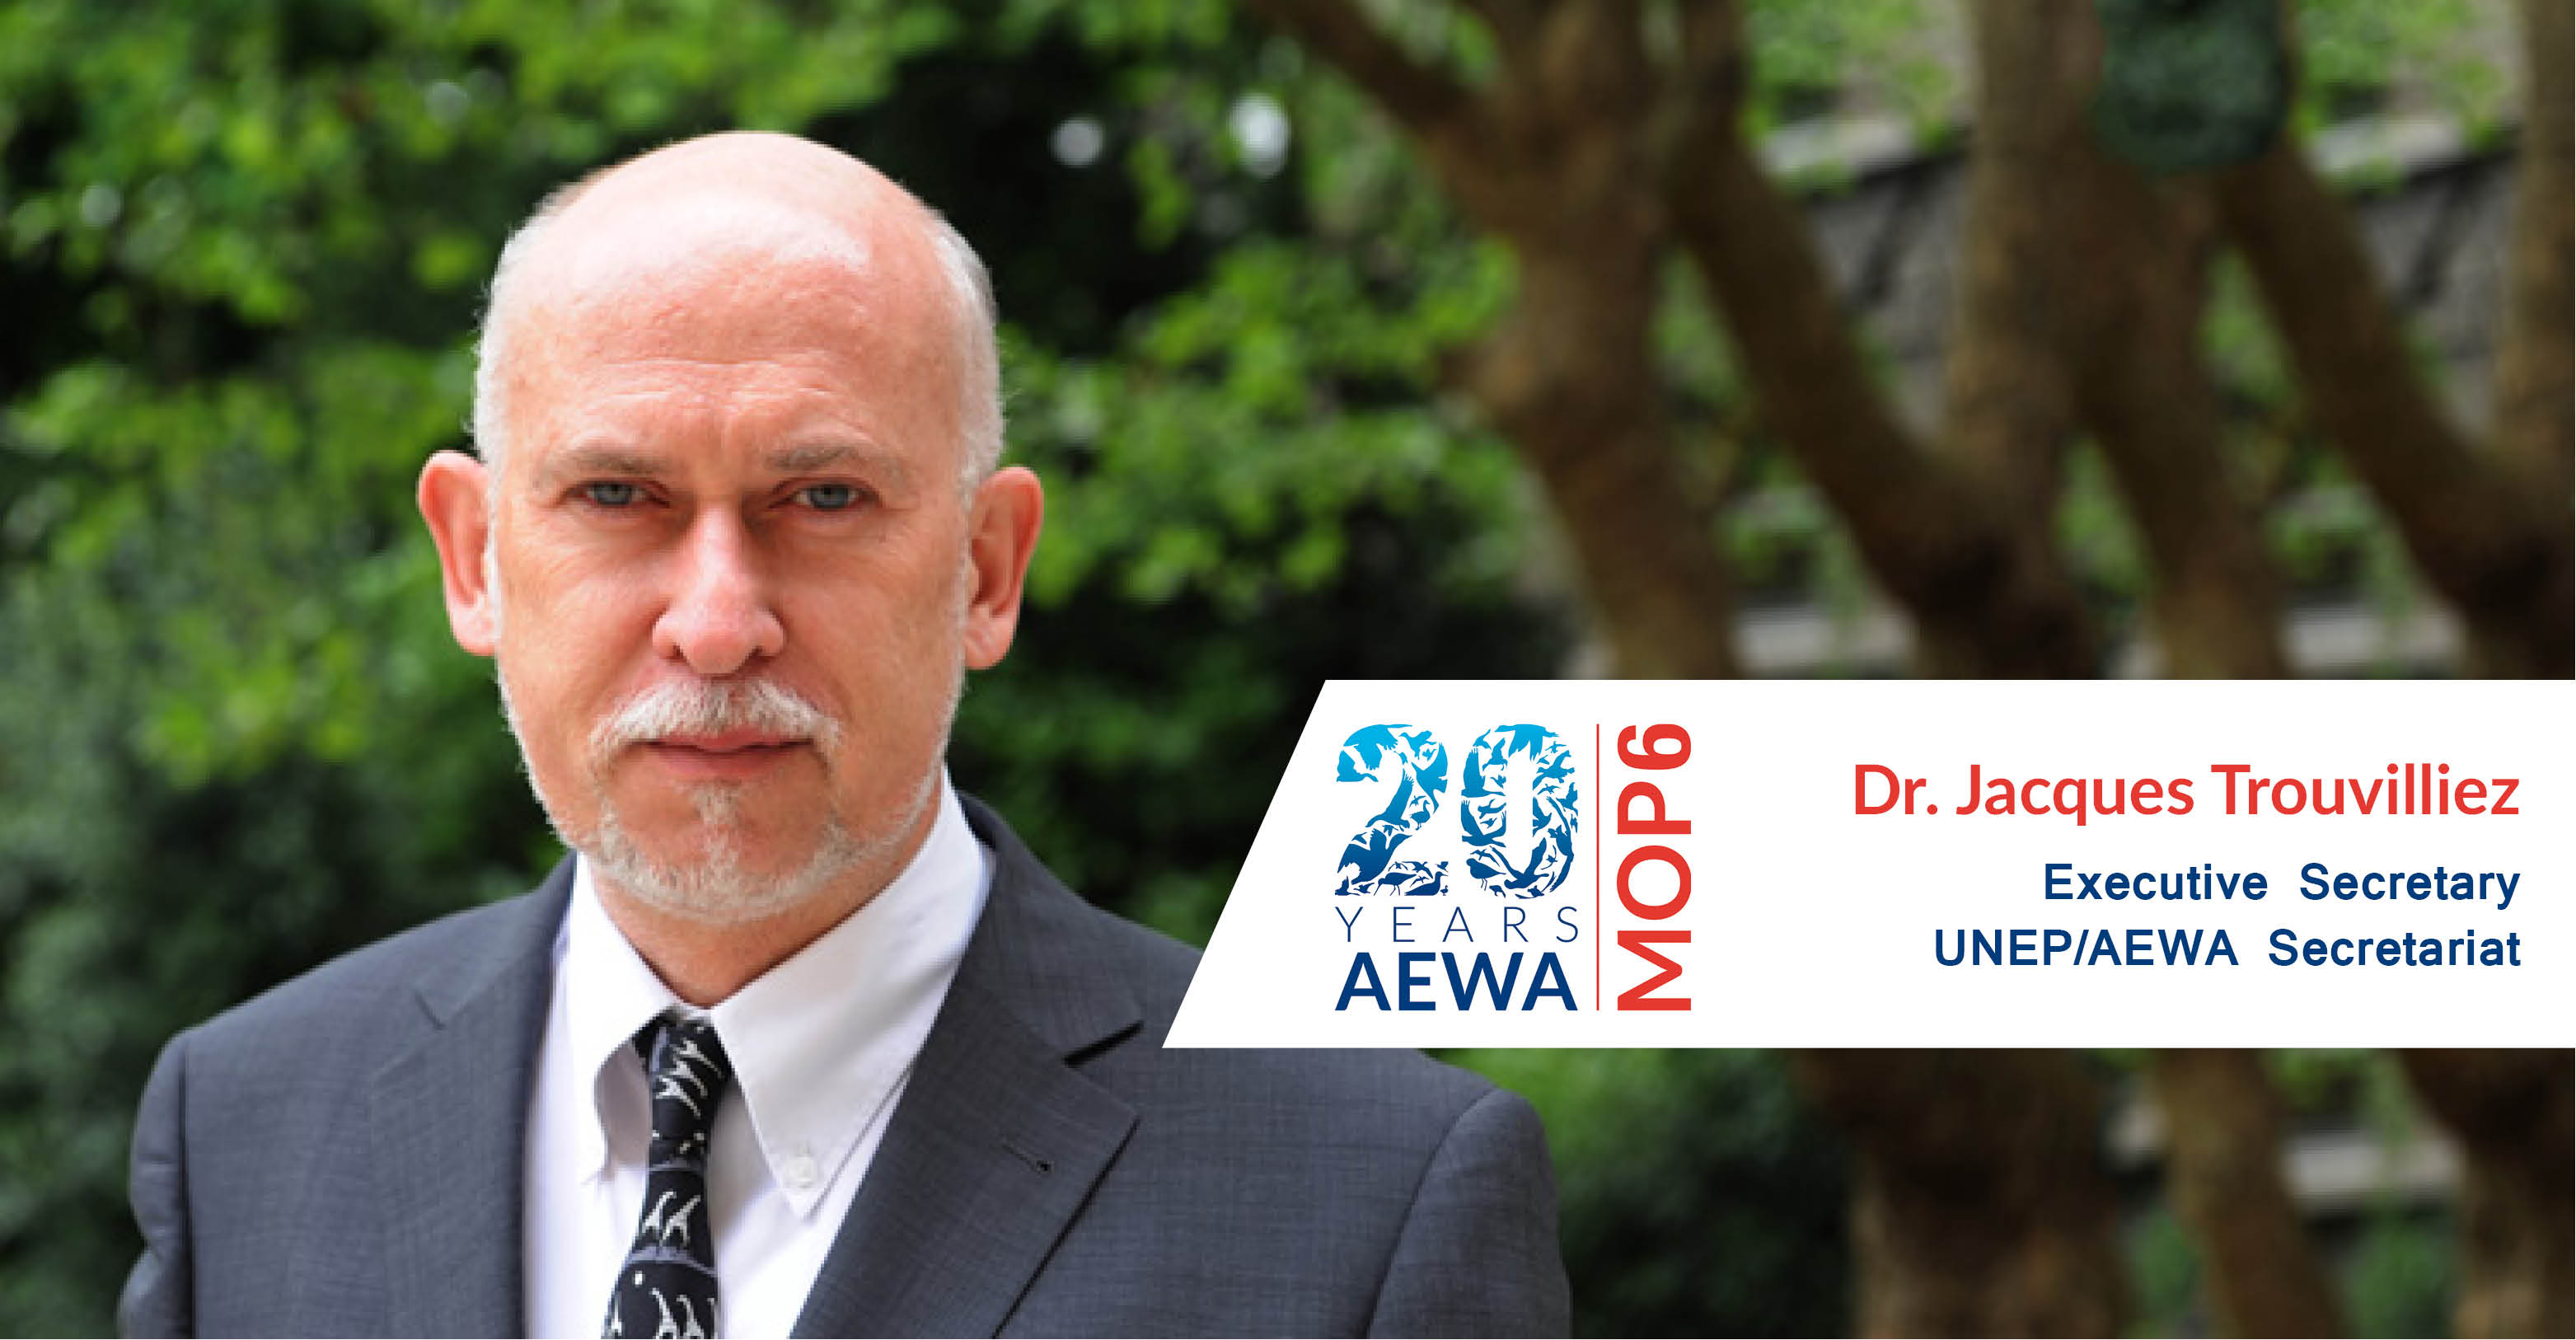 Dr. Jacques Trouvilliez, Executive Secretary, UNEP/AEWA Secretariat 